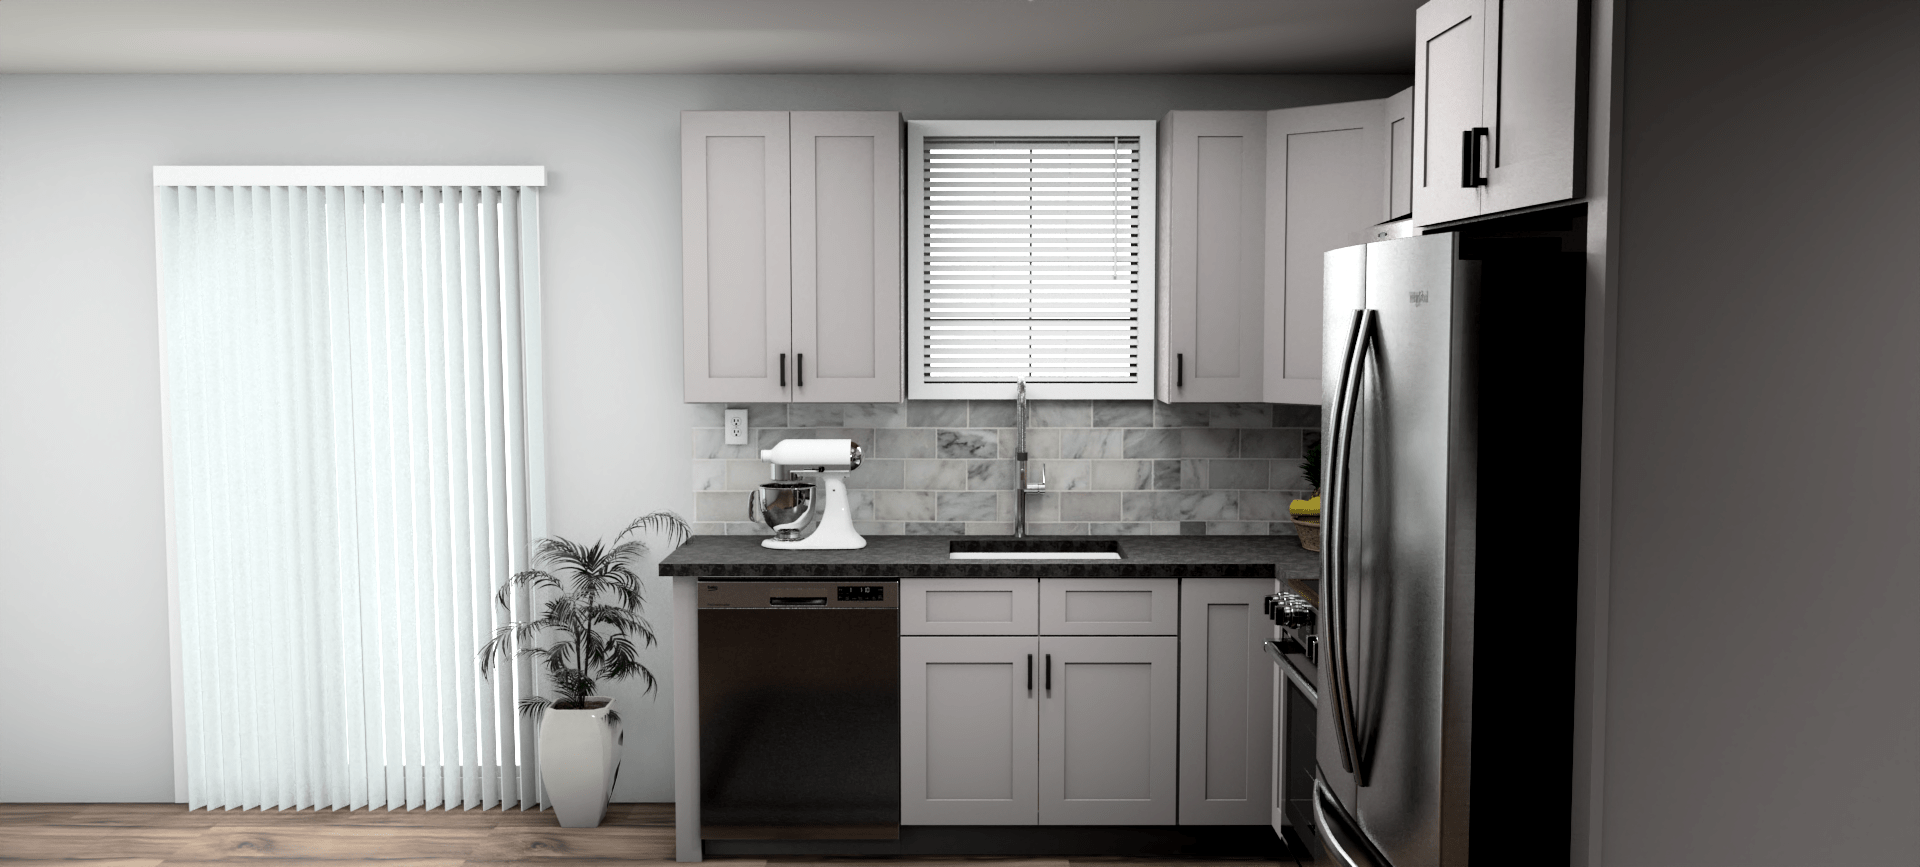 Fabuwood Allure Galaxy Nickel 8 x 10 L Shaped Kitchen Side Layout Photo